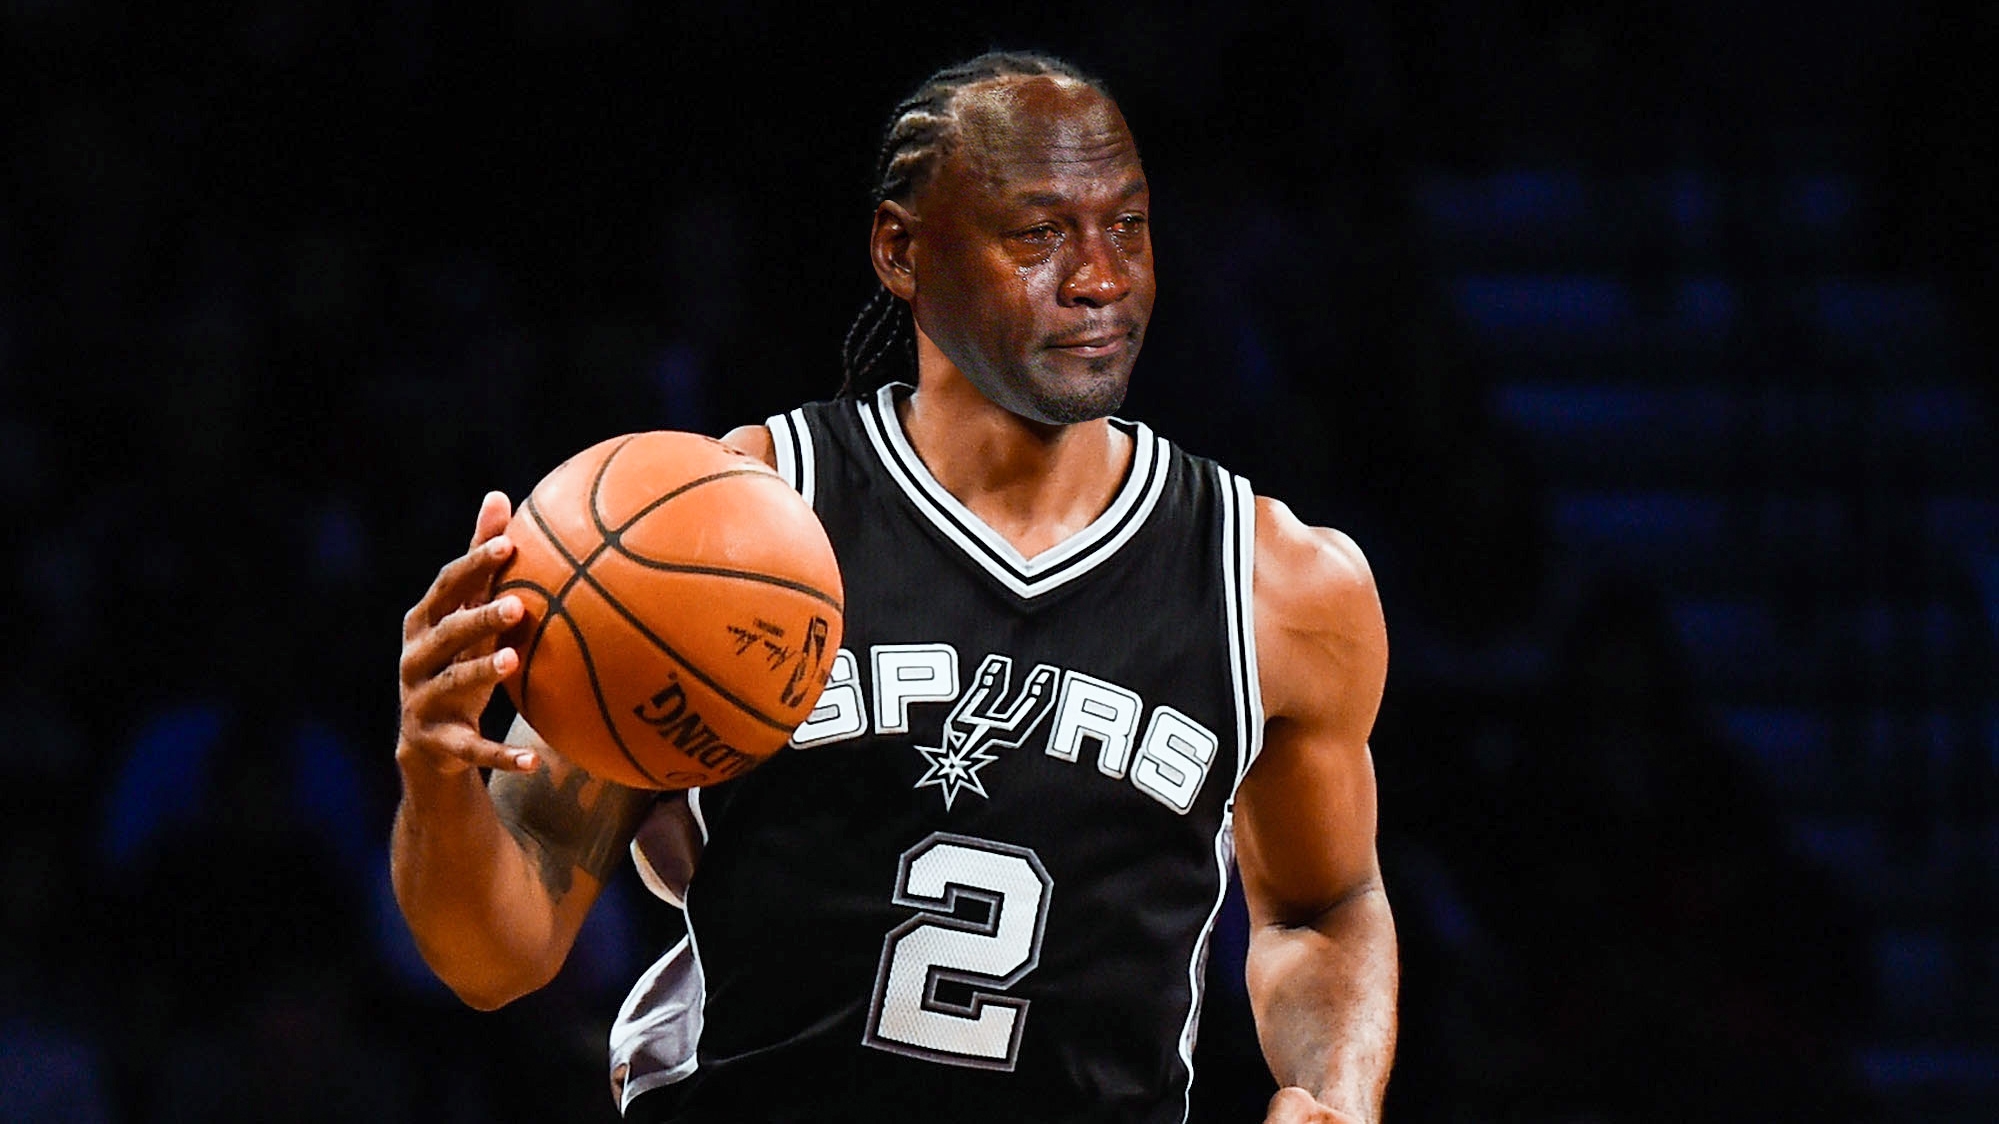 Kawhi Leonard has no idea what the Crying Jordan meme is | NBA | Sporting News